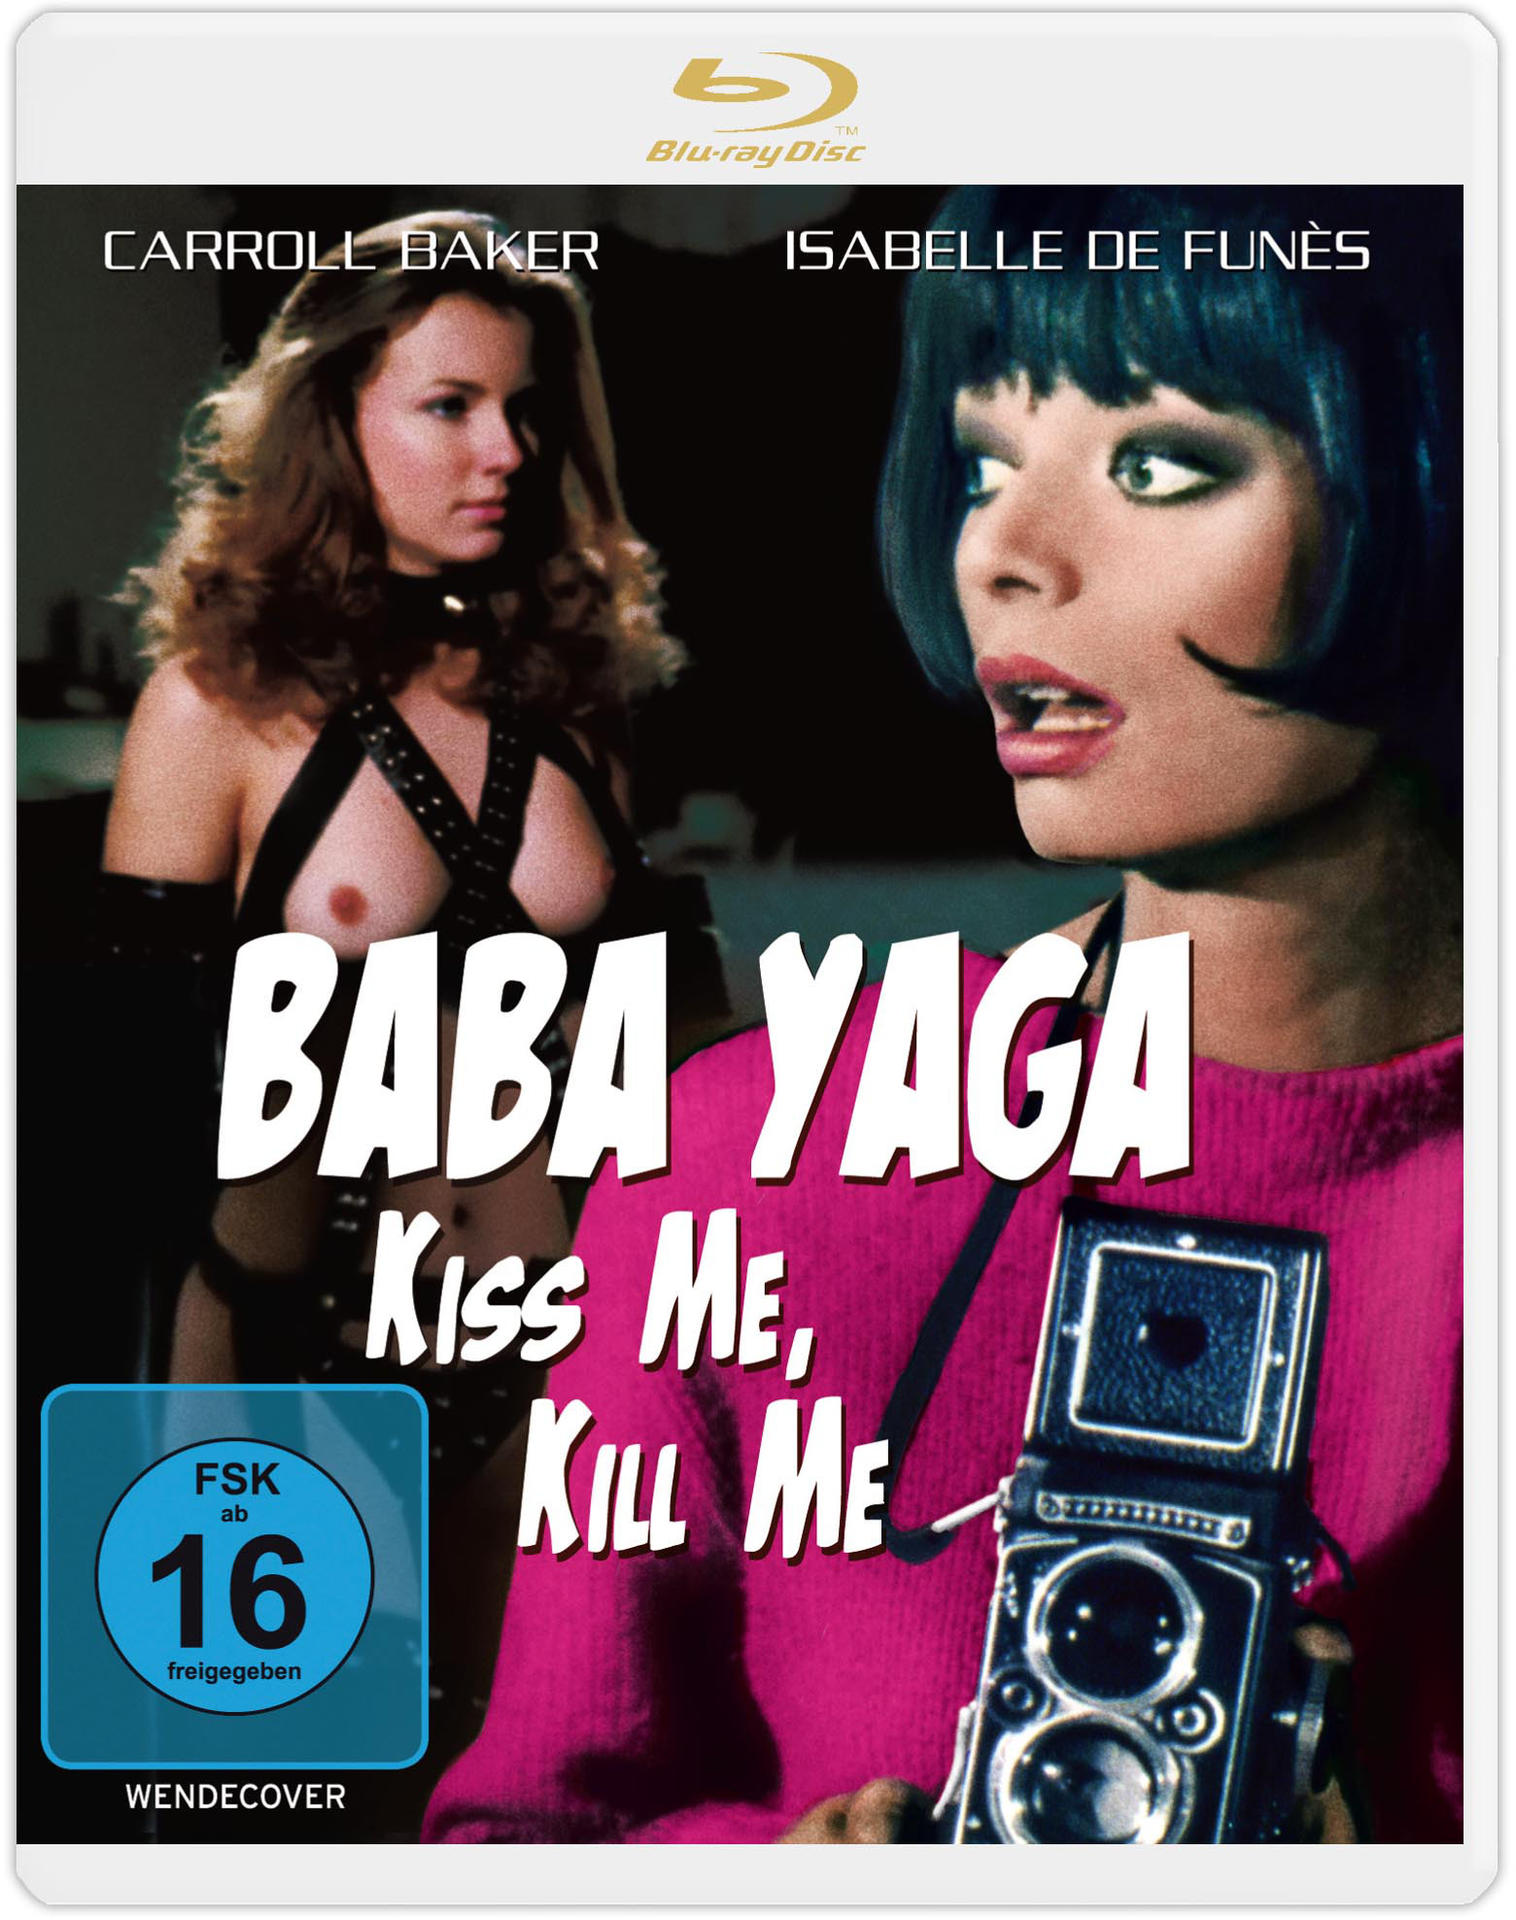 Baba Yaga - Kiss Kill Blu-ray Me Me